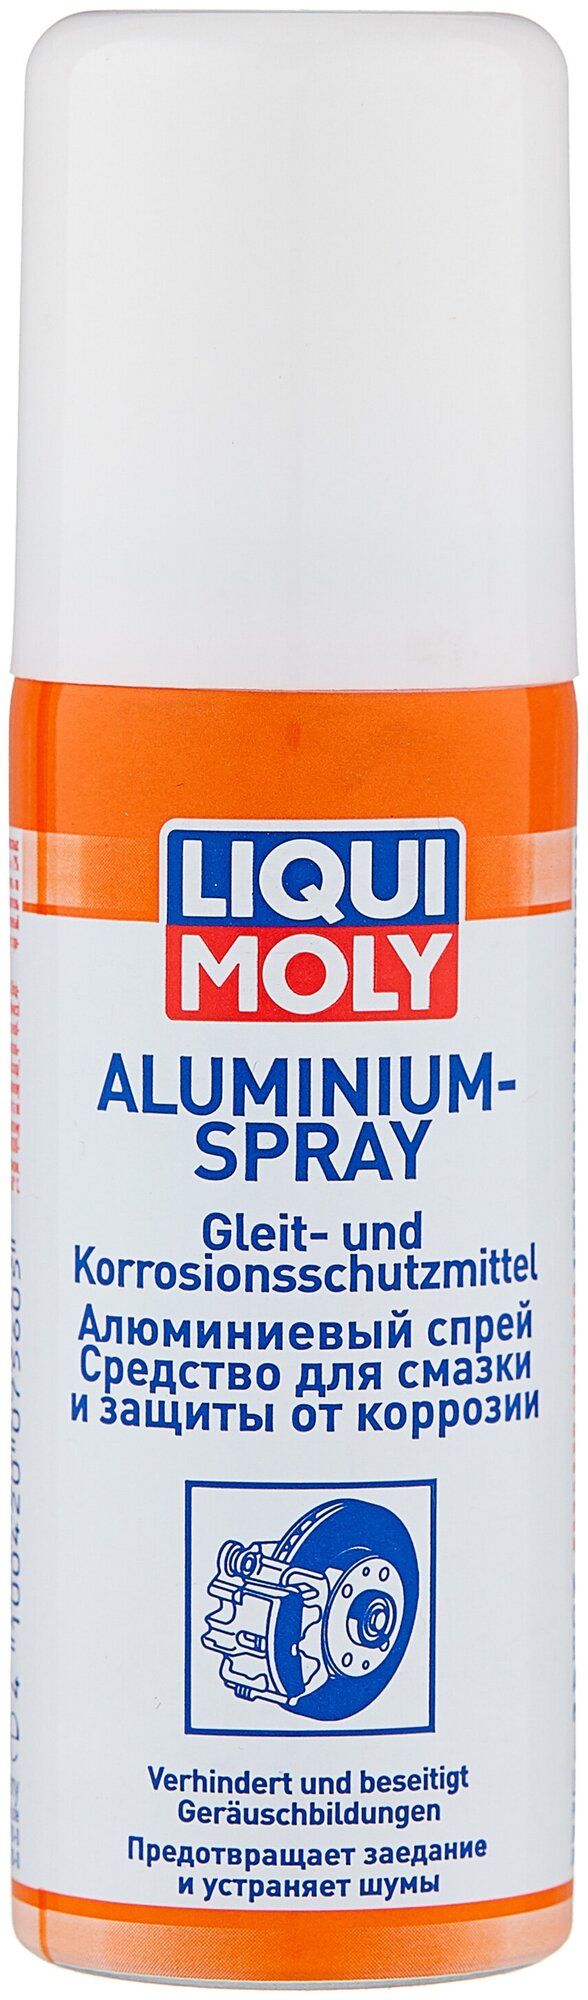 7560 Aluminium-Spray — Алюминиевый спрей 0.05 л.